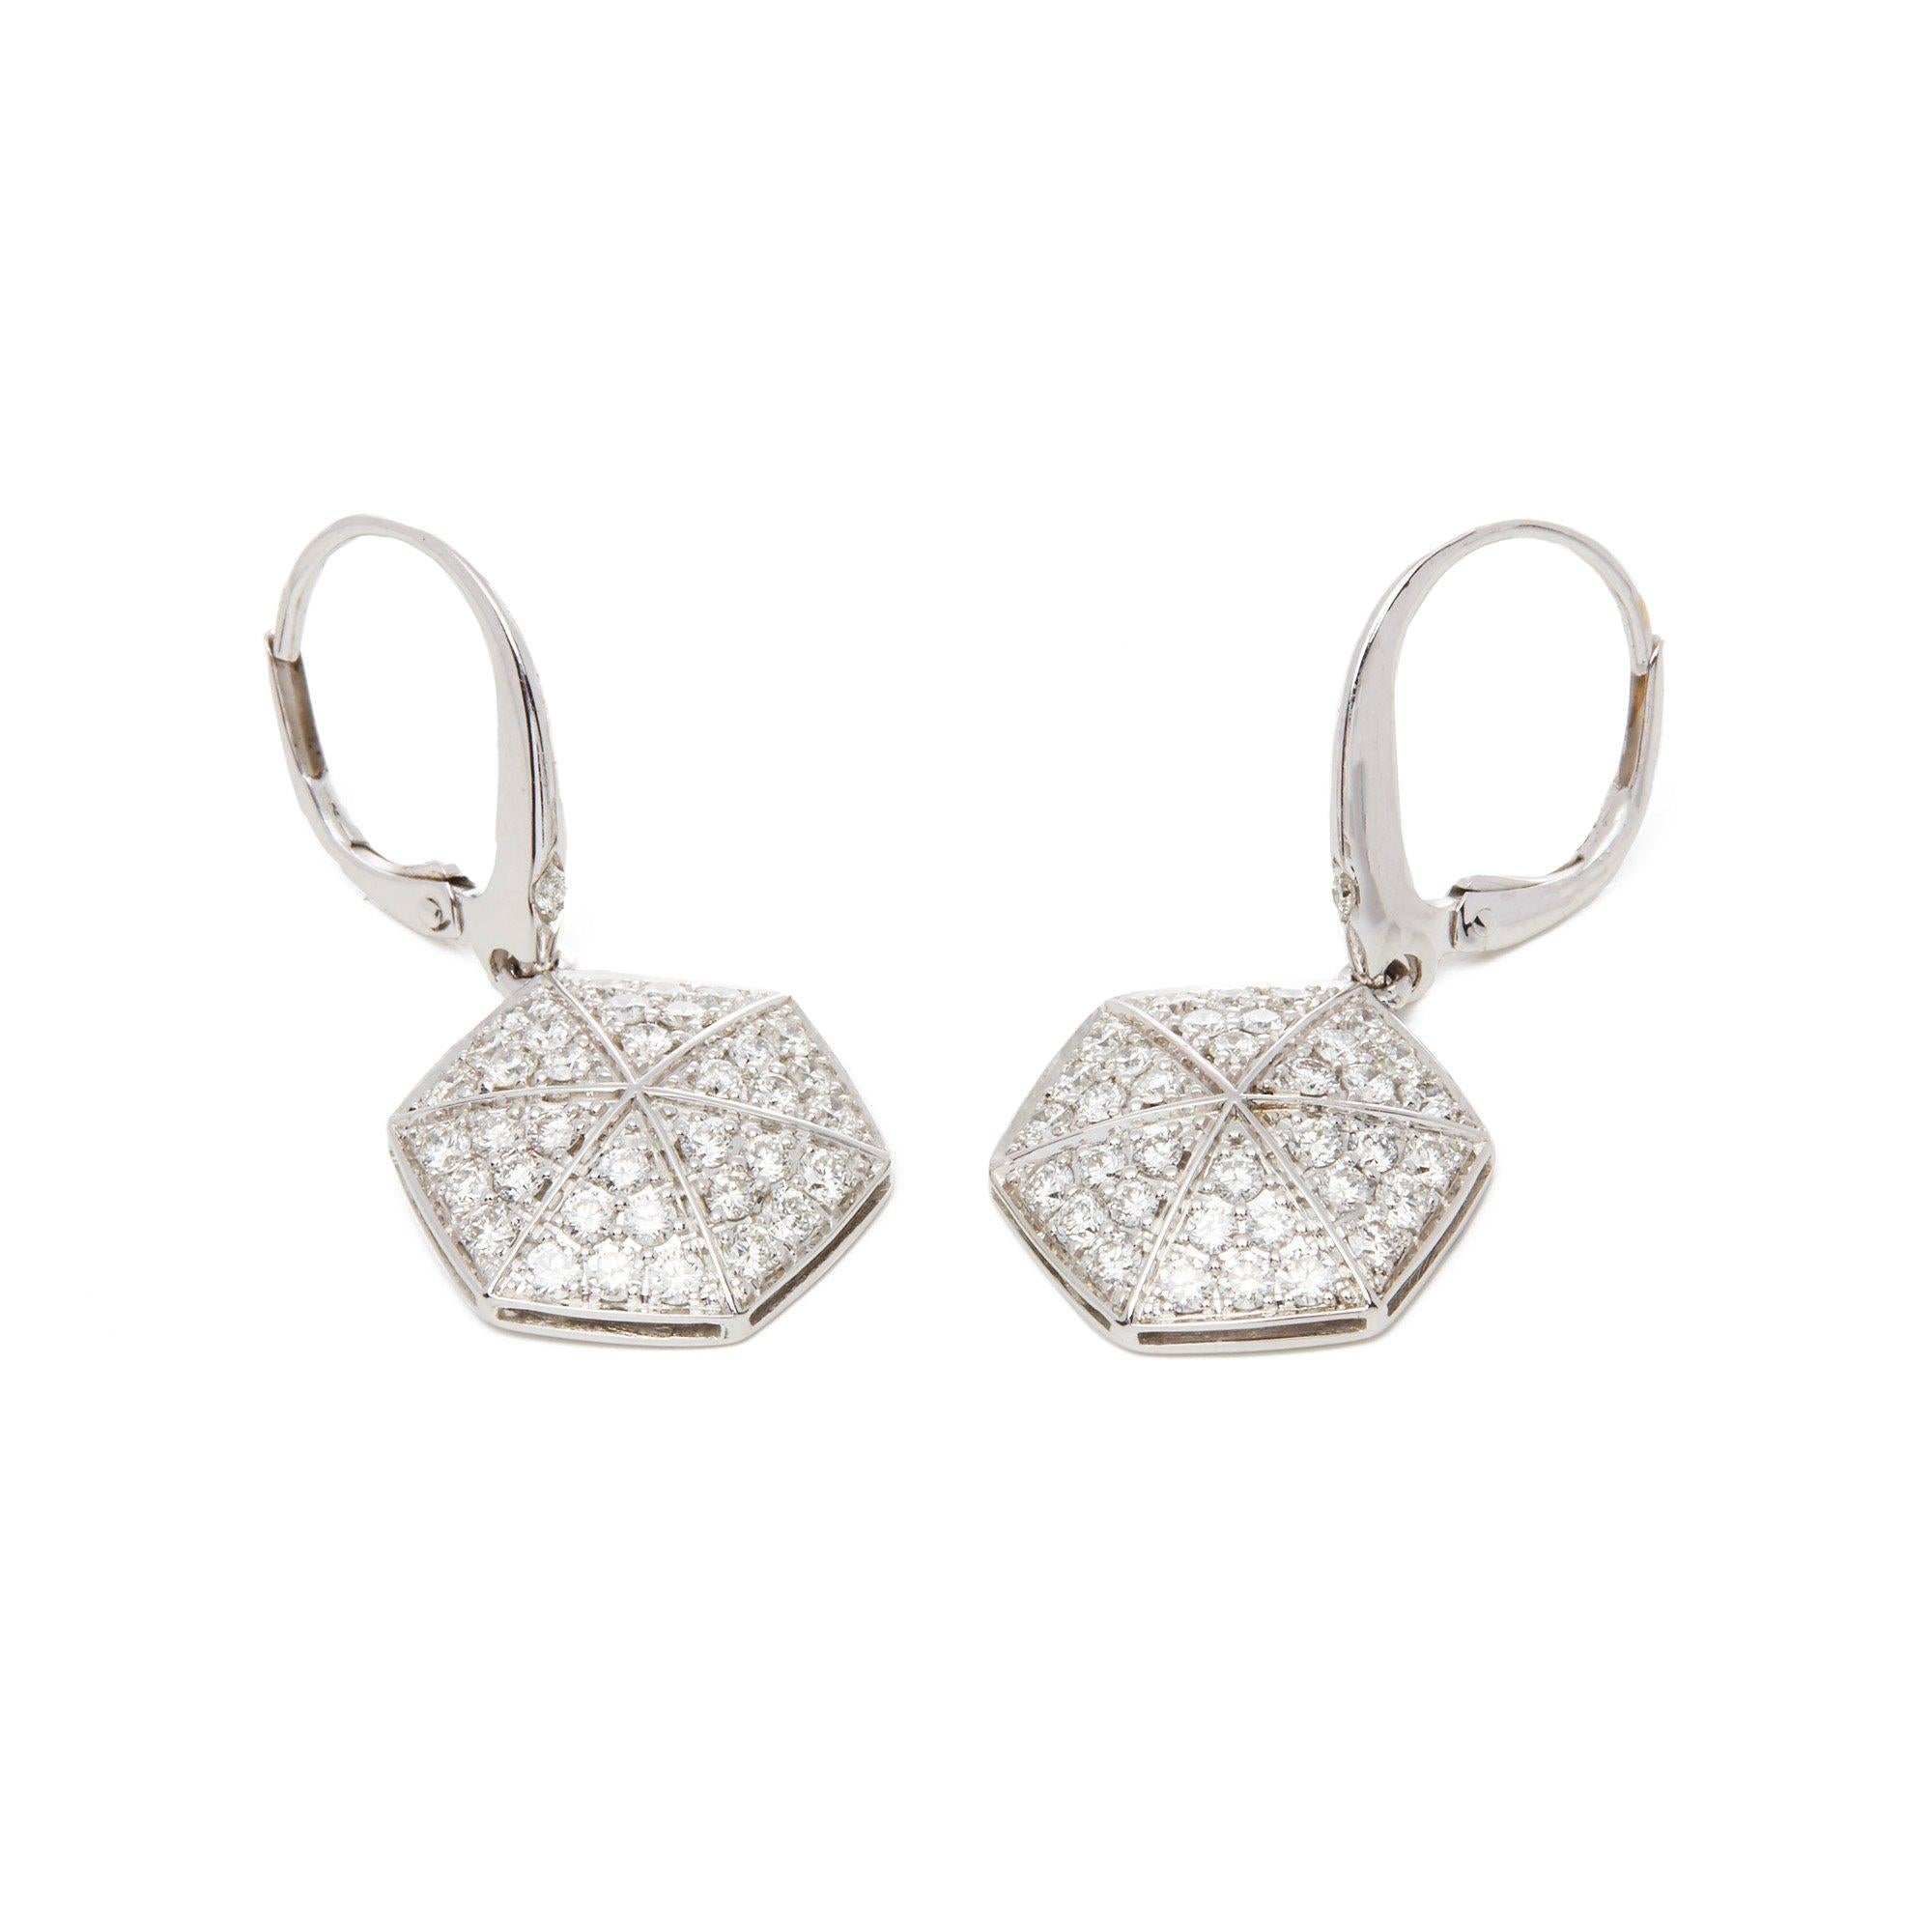 Contemporary Stephen Webster 18 Karat White Gold Full Pave Diamond Deco Earrings